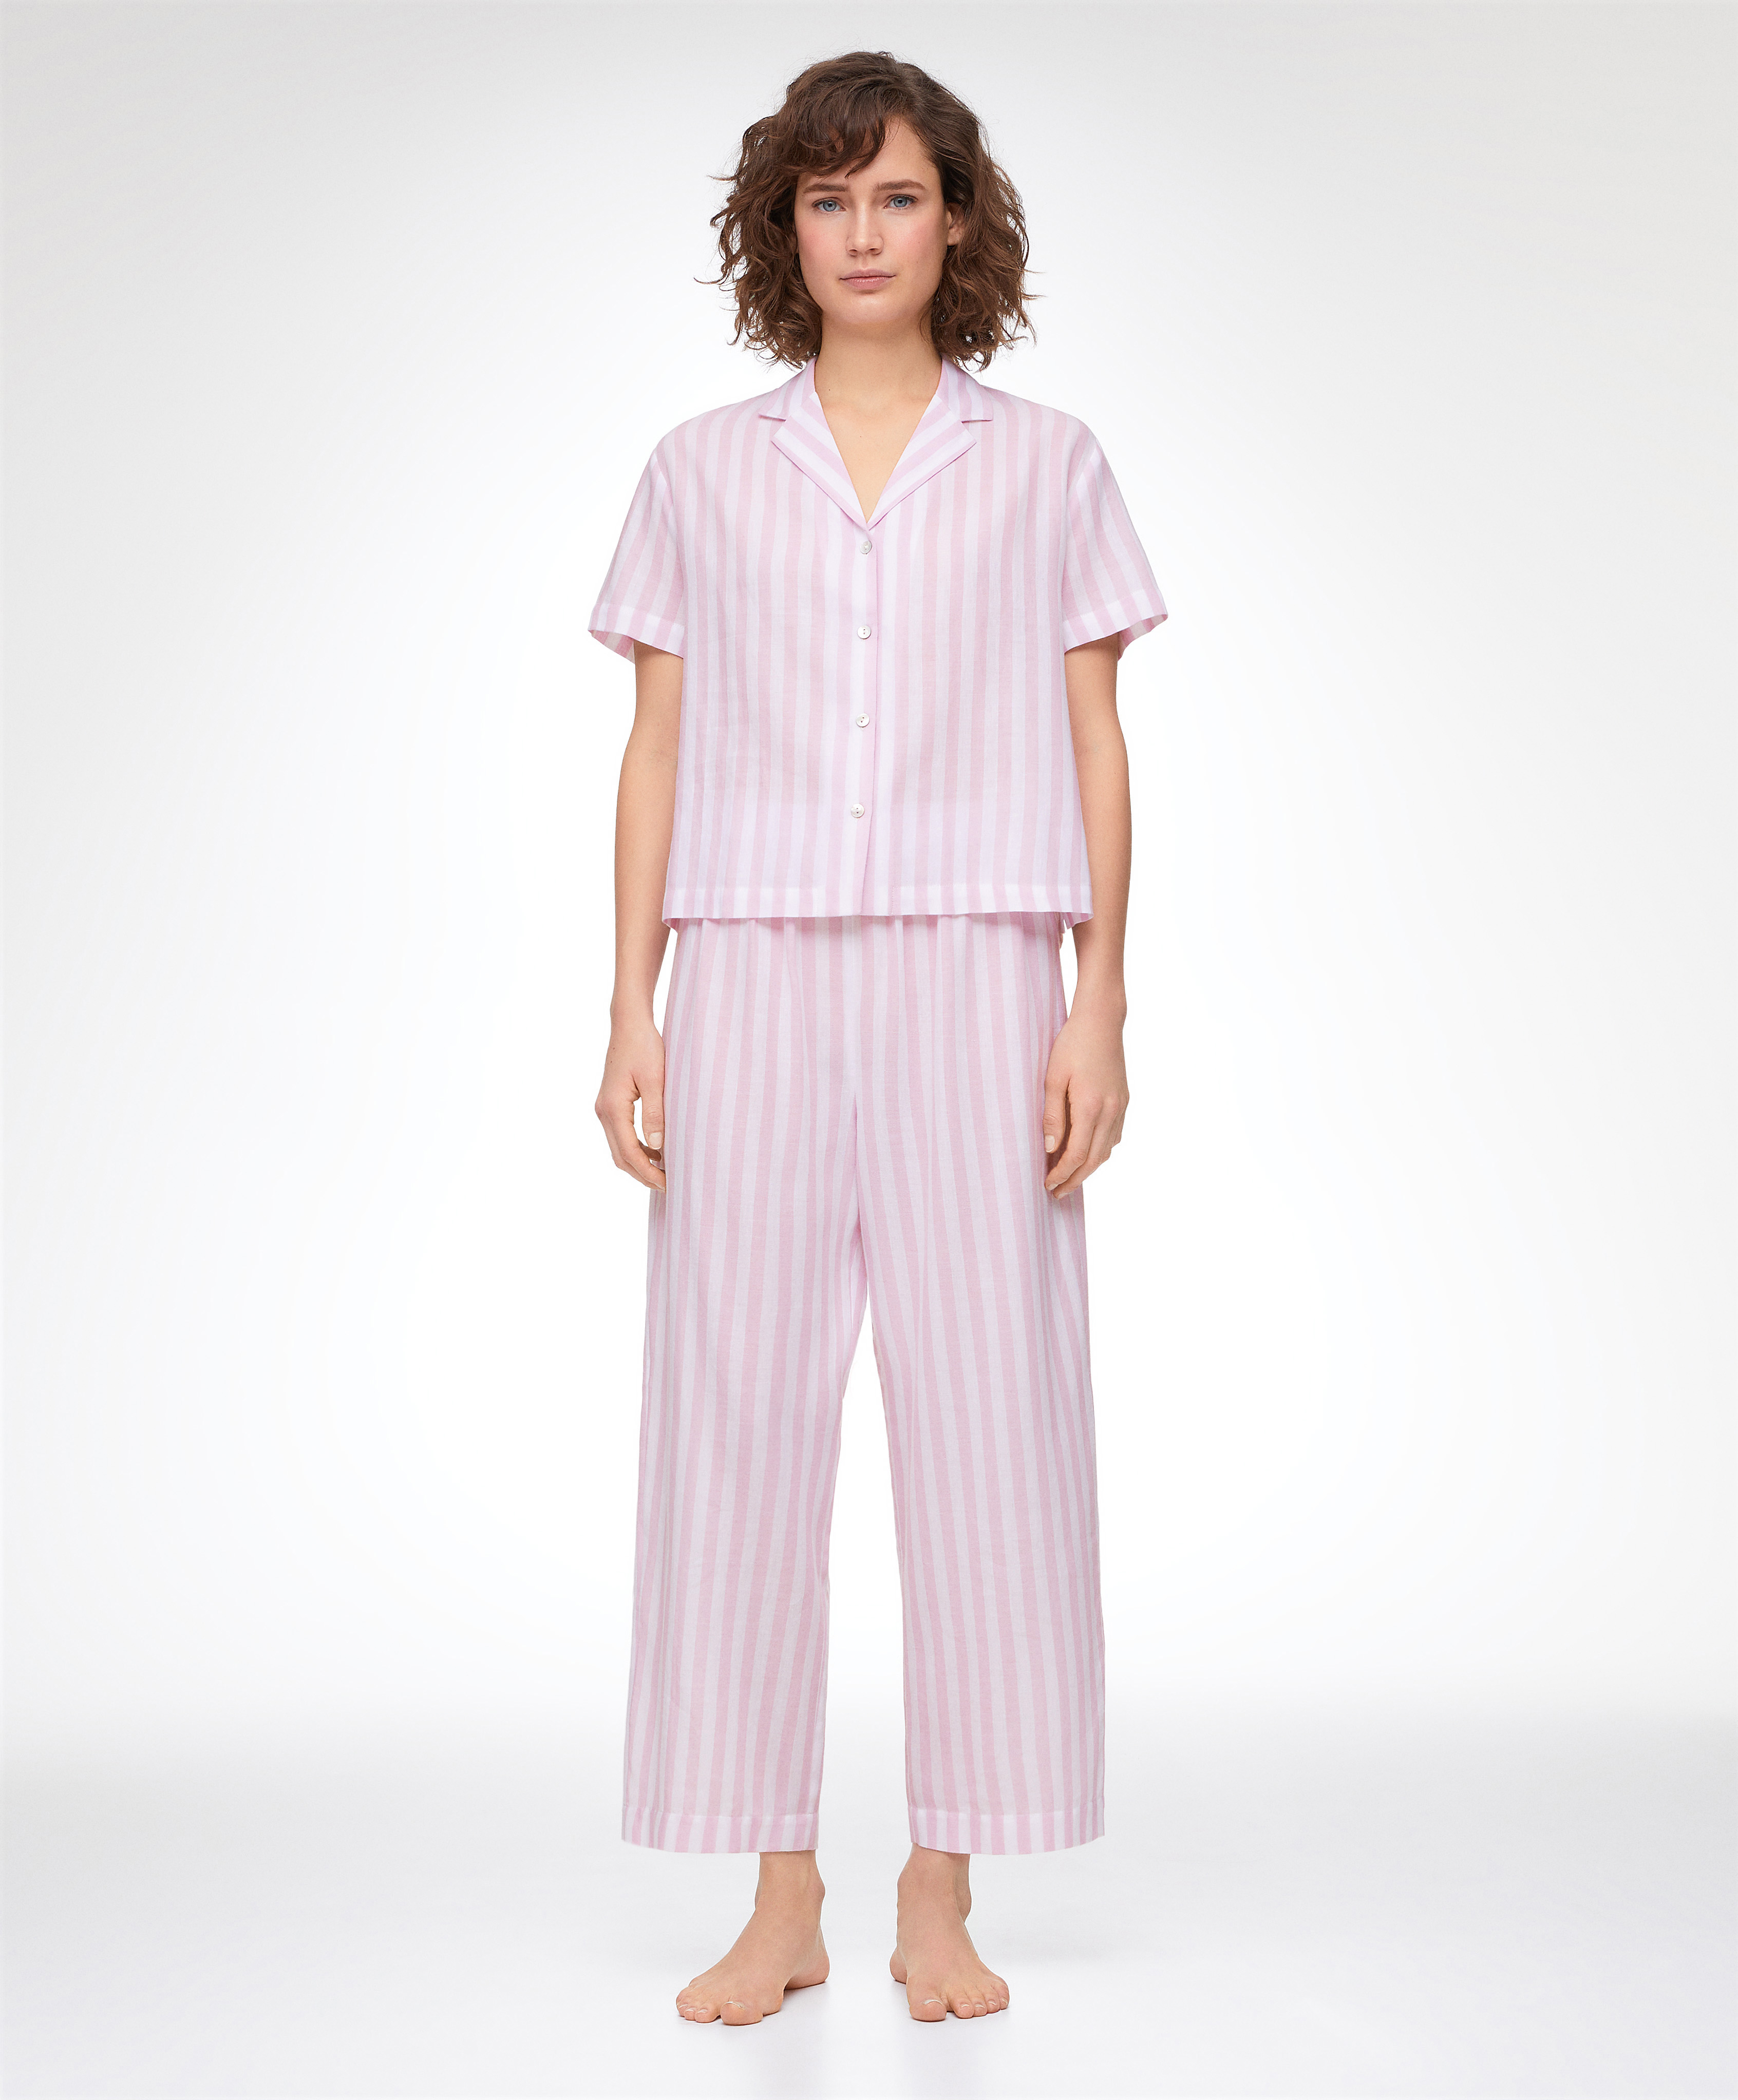 Stripe cotton long pyjama set